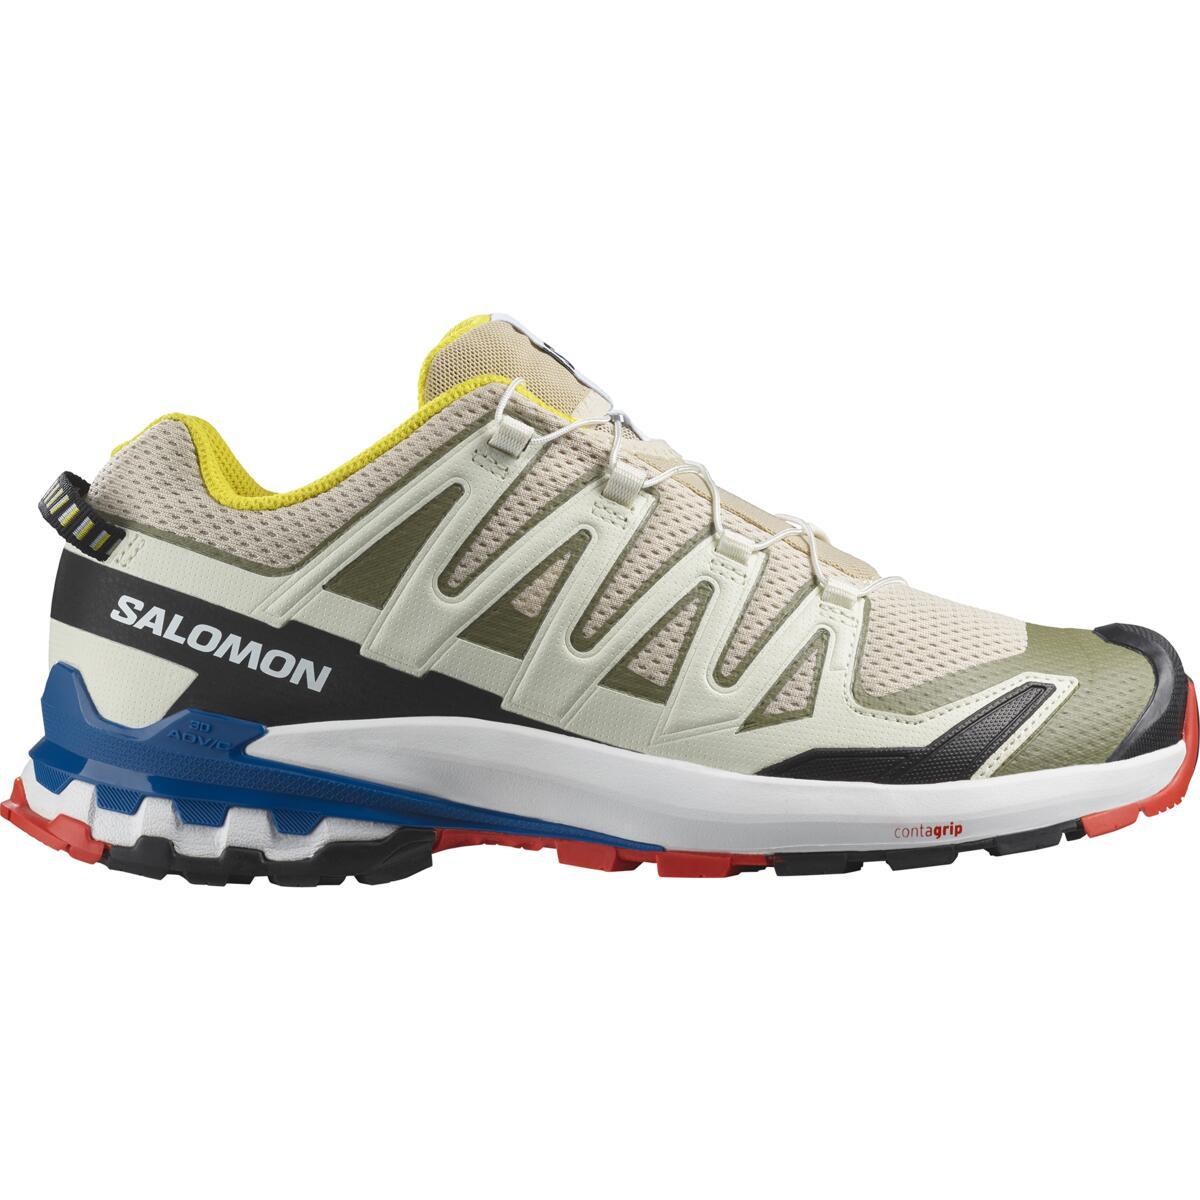 Salomon Xa Pro 3d V9 Trail Running Shoes - Rainy Day/white/lapis Blue